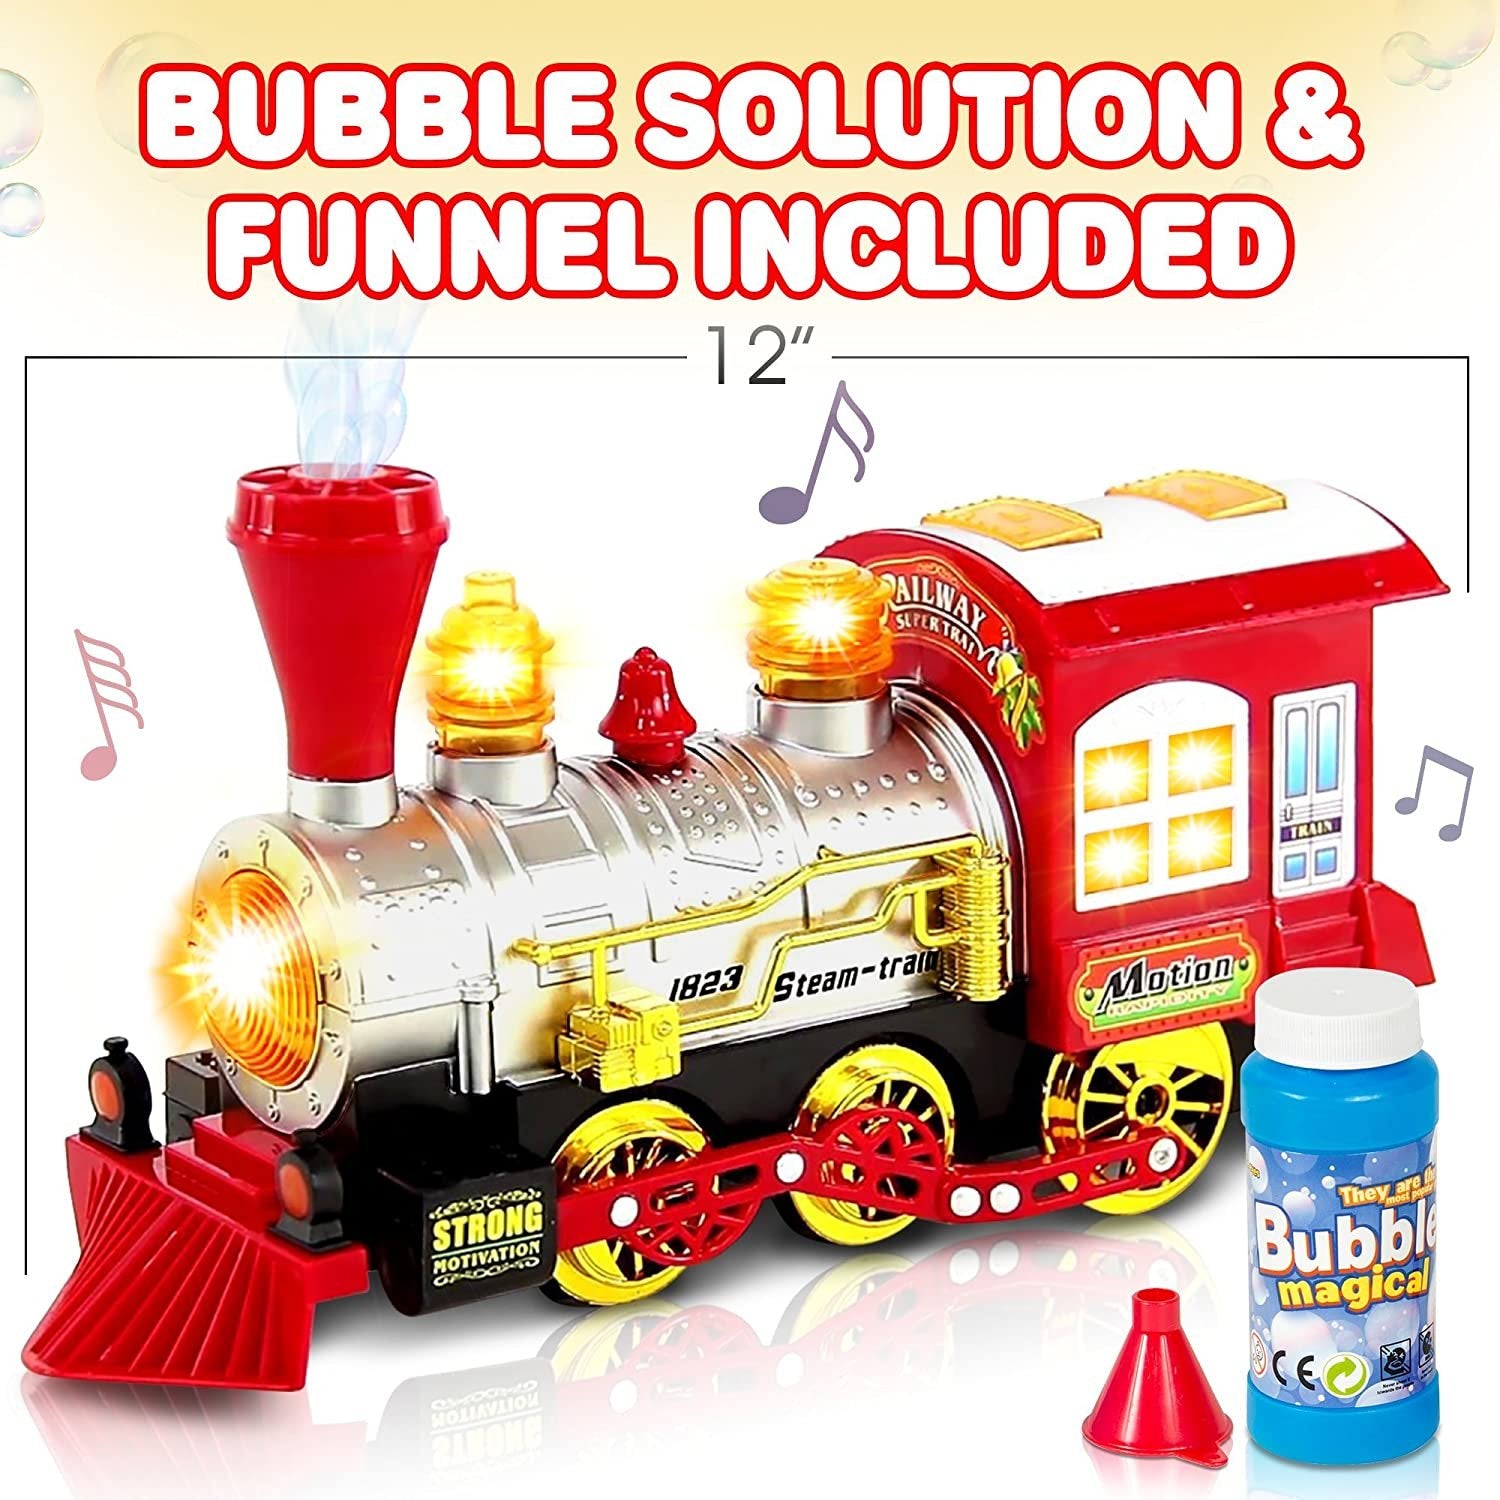 Bubble Blowing Toy Train - Lights, Sounds & Bump & Go Steam Locomotive for Kids